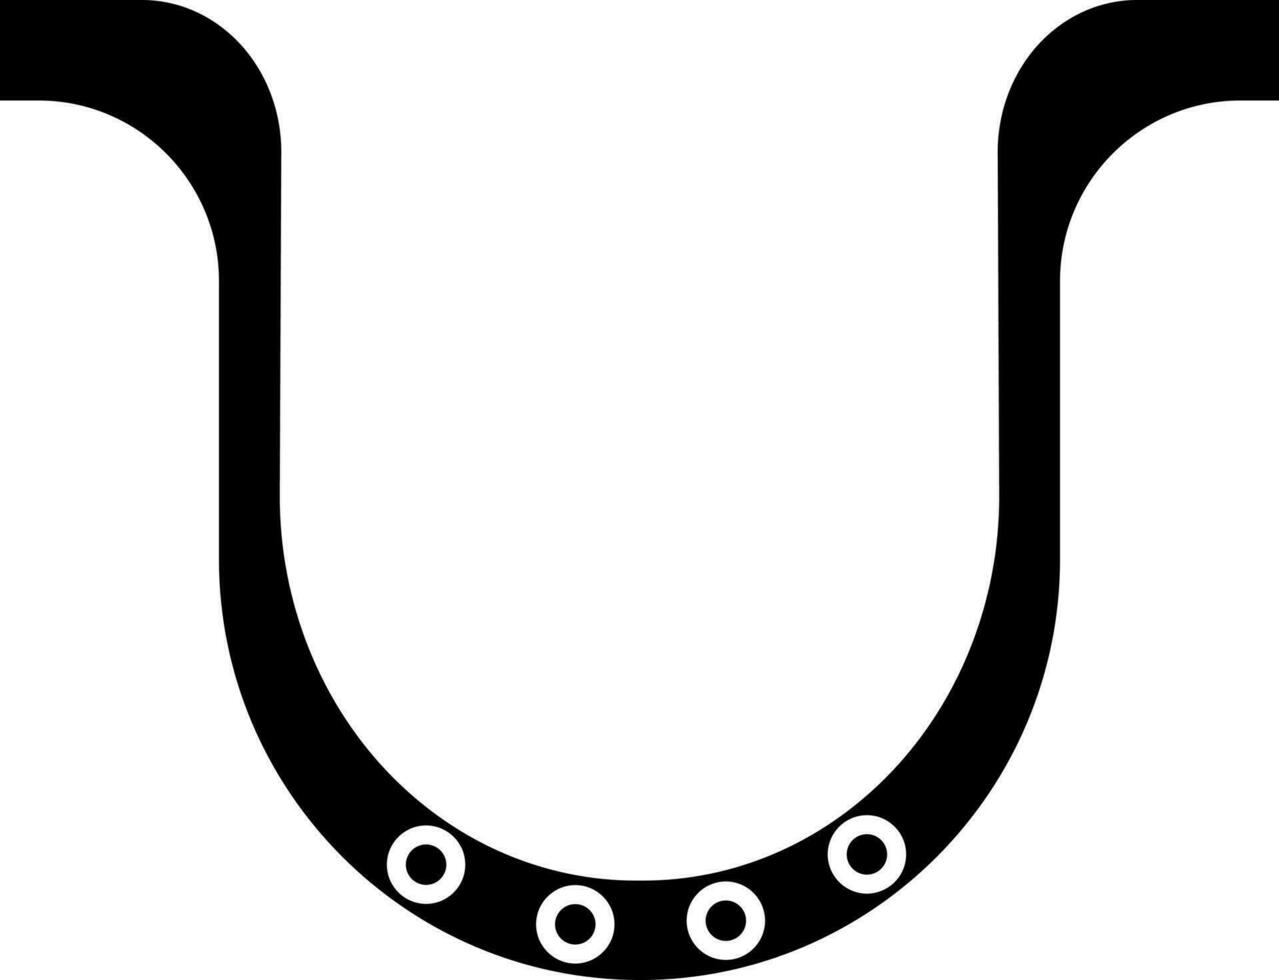 Black horse shoe icon on white background. vector